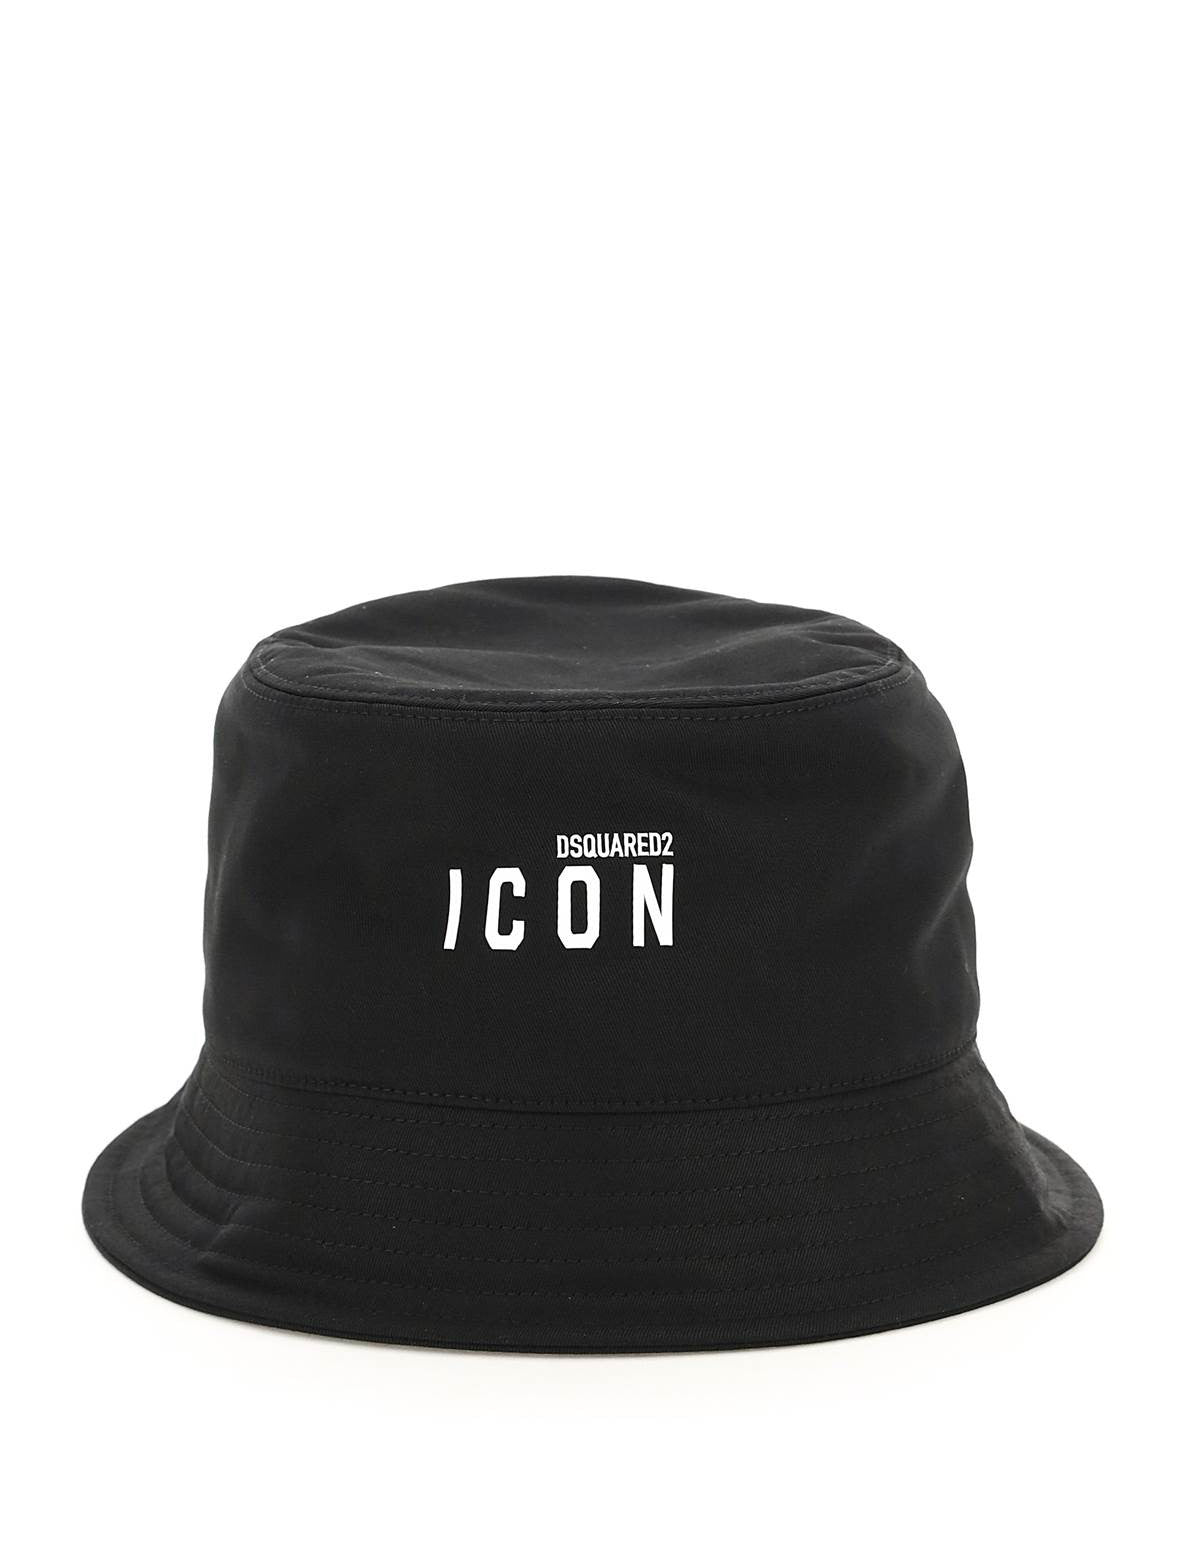 dsquared2-icon-bucket-hat.jpg